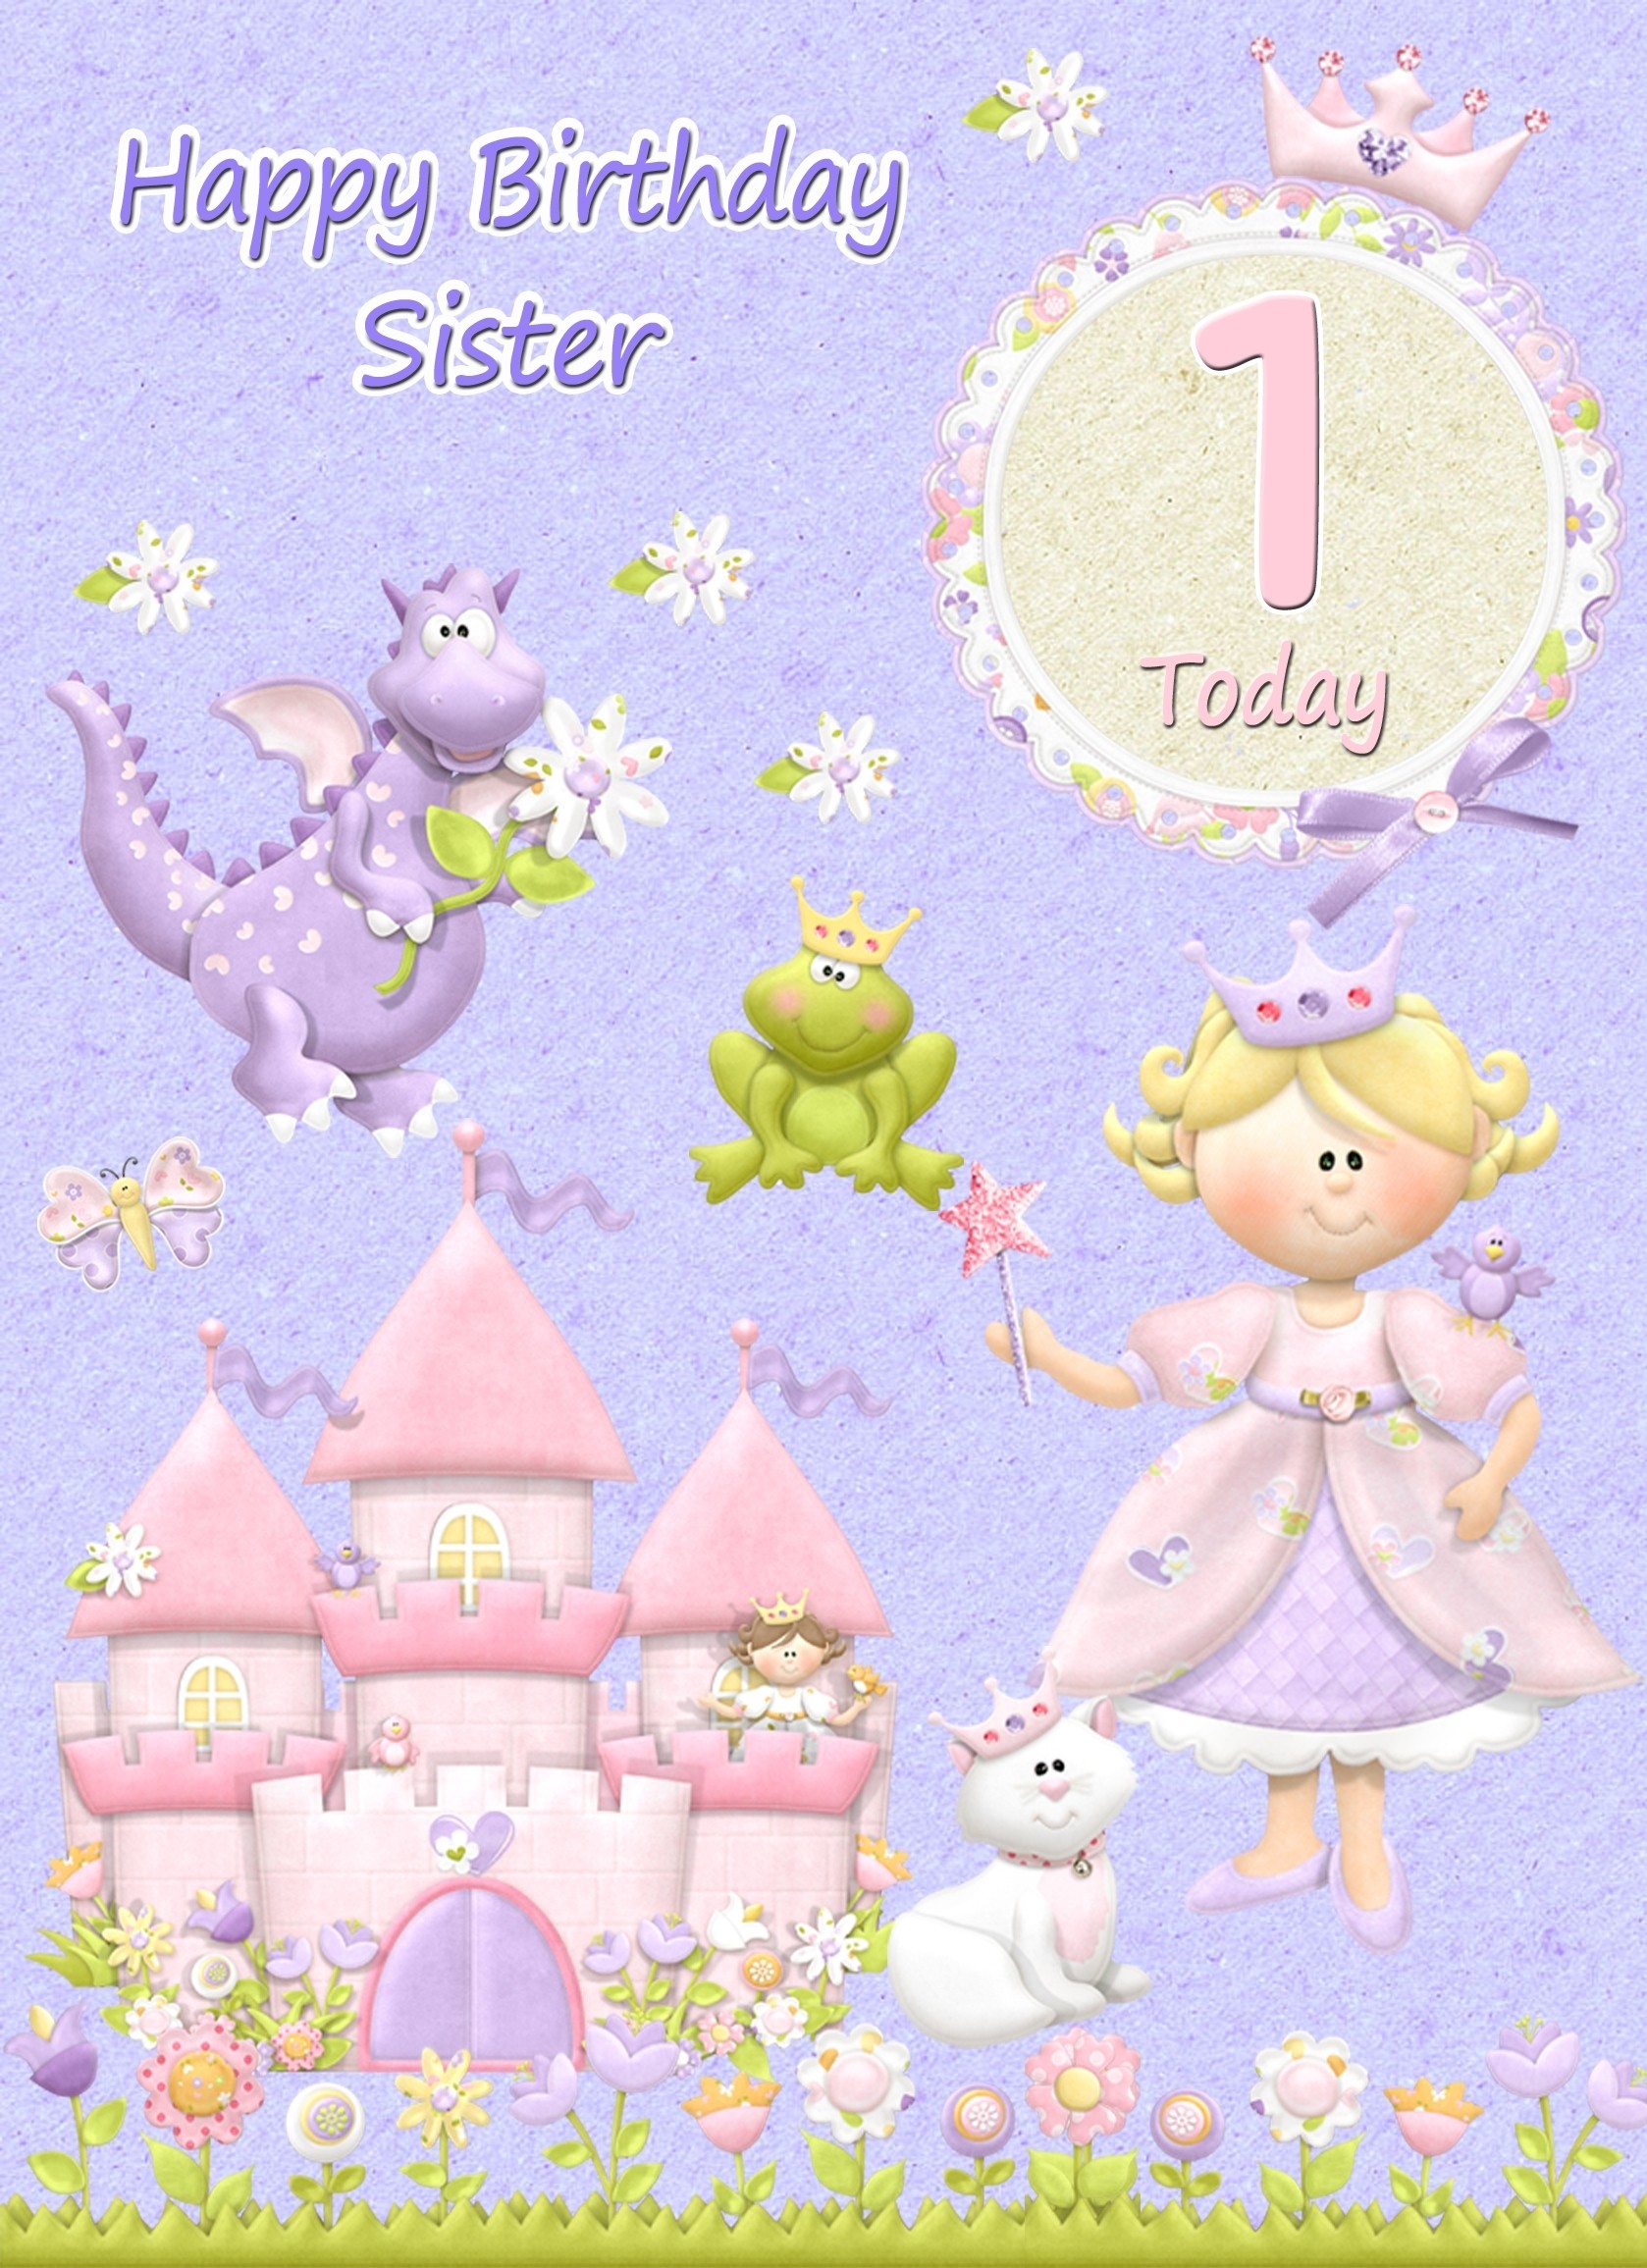 Kids 1st Birthday Princess Cartoon Card for Sister